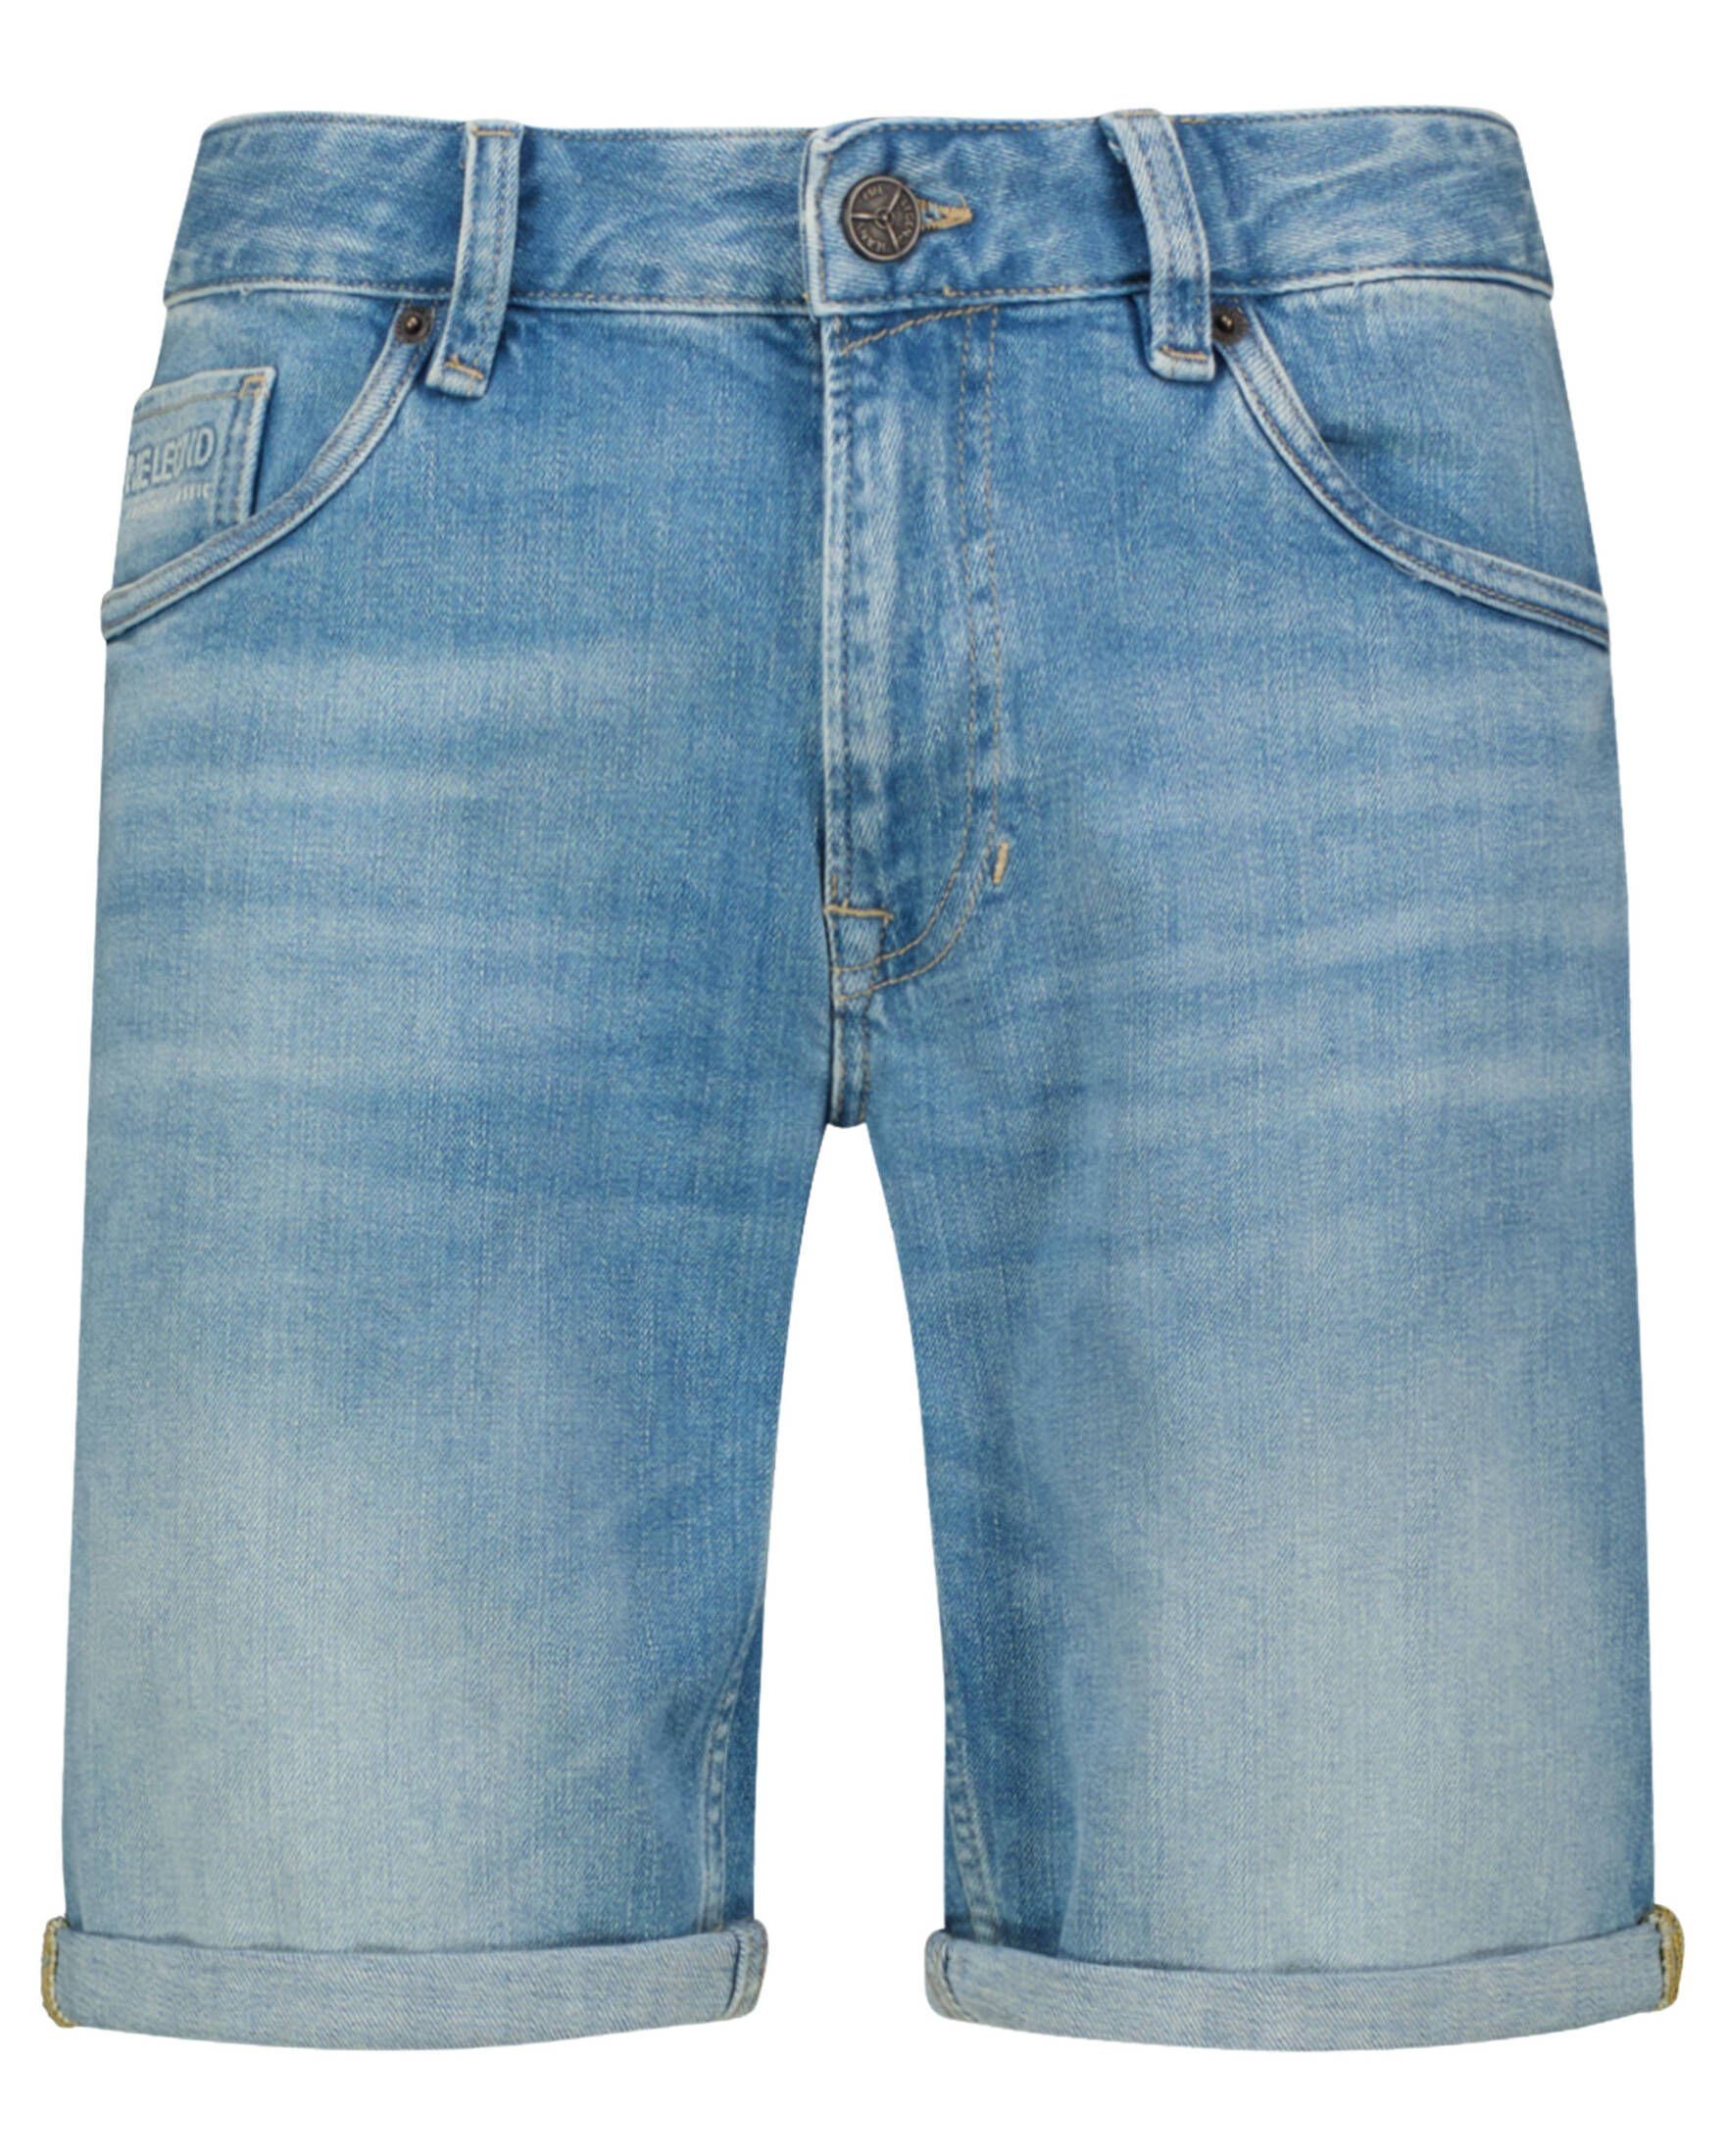 PME LEGEND (80) Herren NIGHTFLIGHT Fit bleached Jeansshorts Regular Jeanshorts